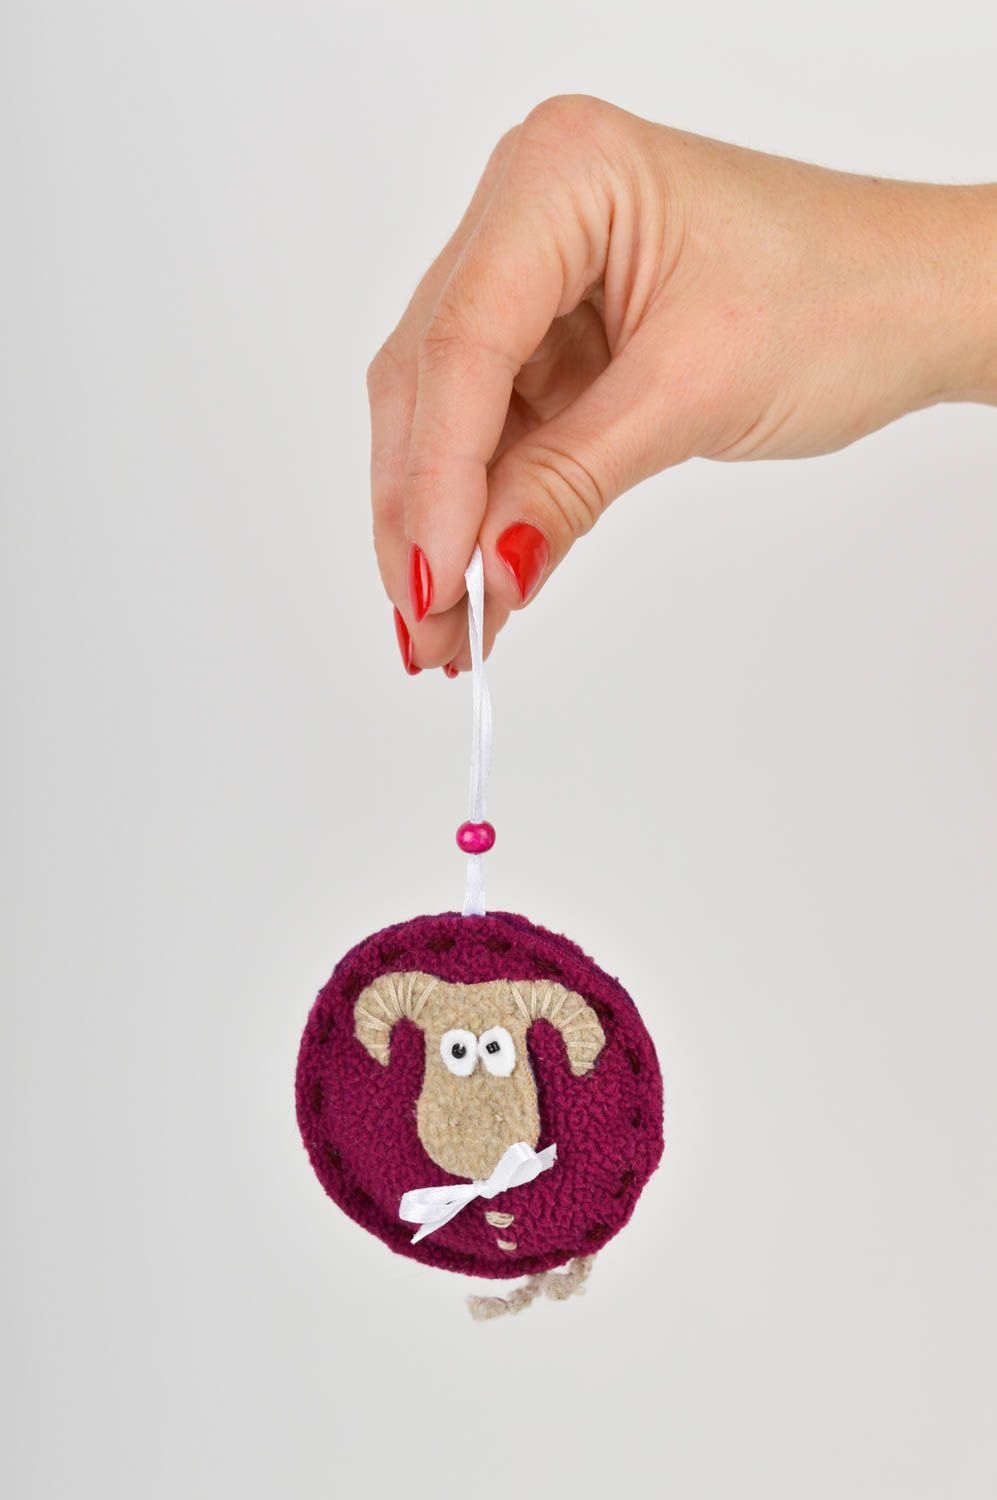 Handmade trinket sheep keychain toy keychain phone strap handmade gift soft toy  photo 2